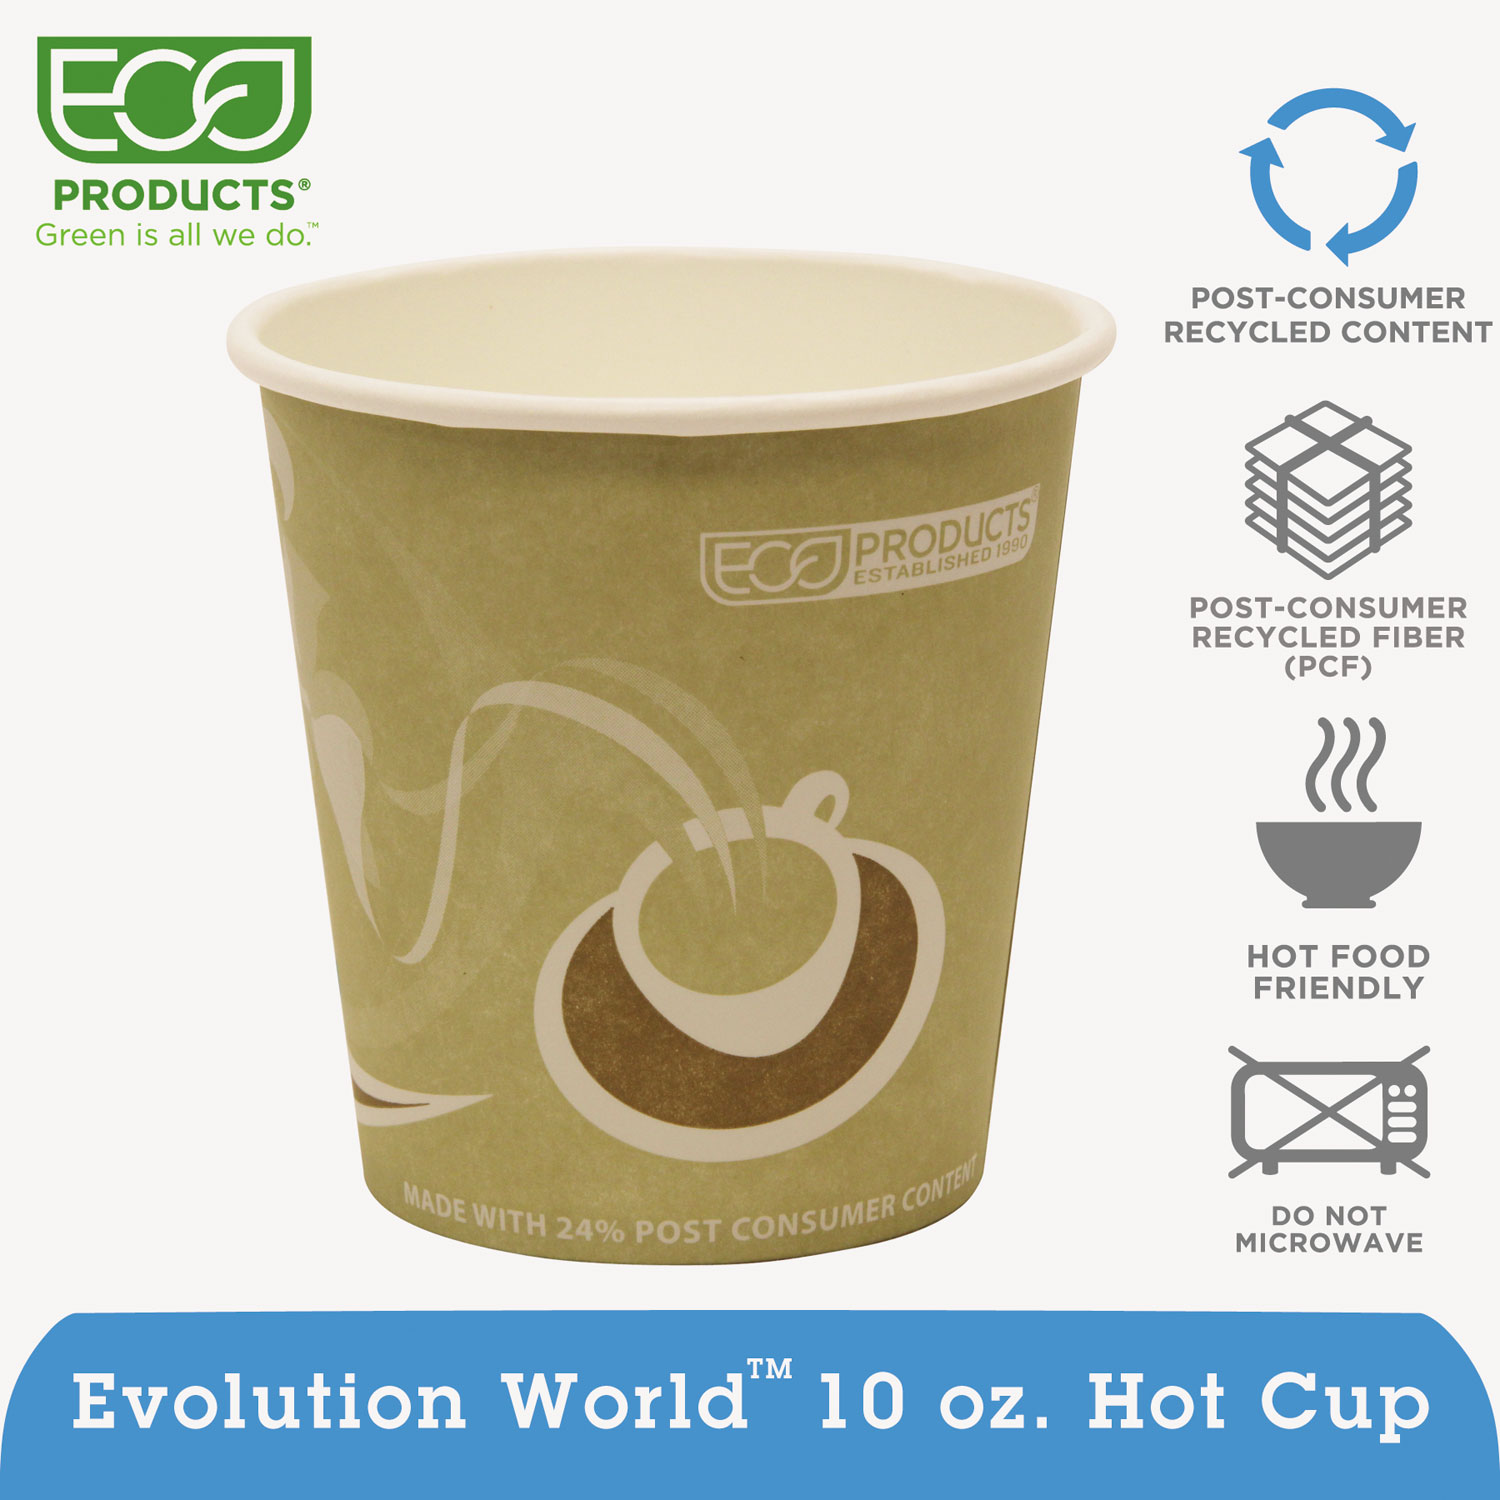  Eco-Products EP-BRHC10-EWPK Evolution World 24% Recycled Content Hot Cups Convenience Pack - 10oz., 50/PK (ECOEPBRHC10EWPK) 